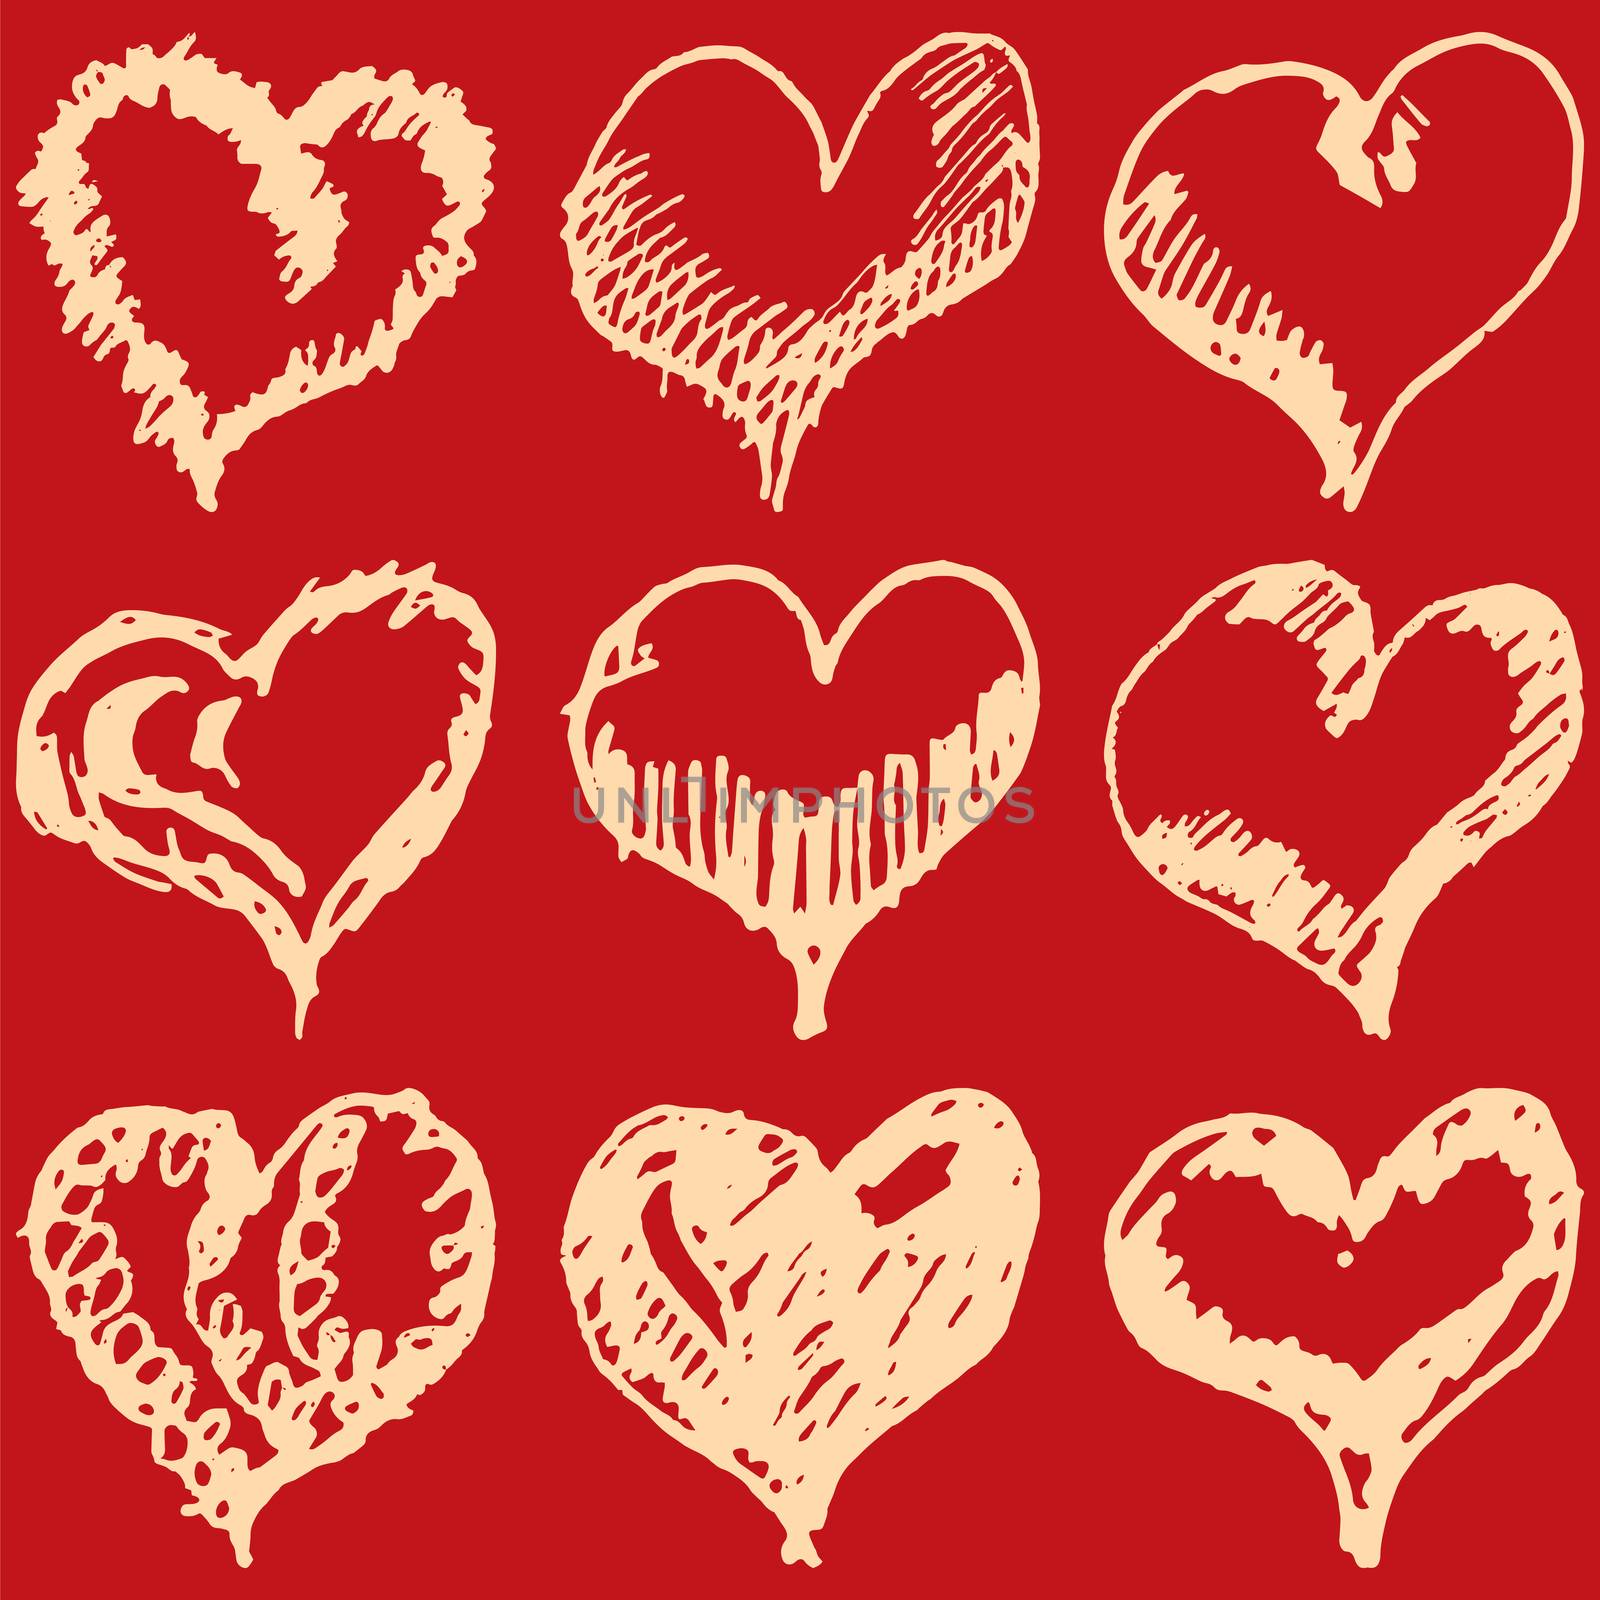 valentine hearts sketch set on red background.